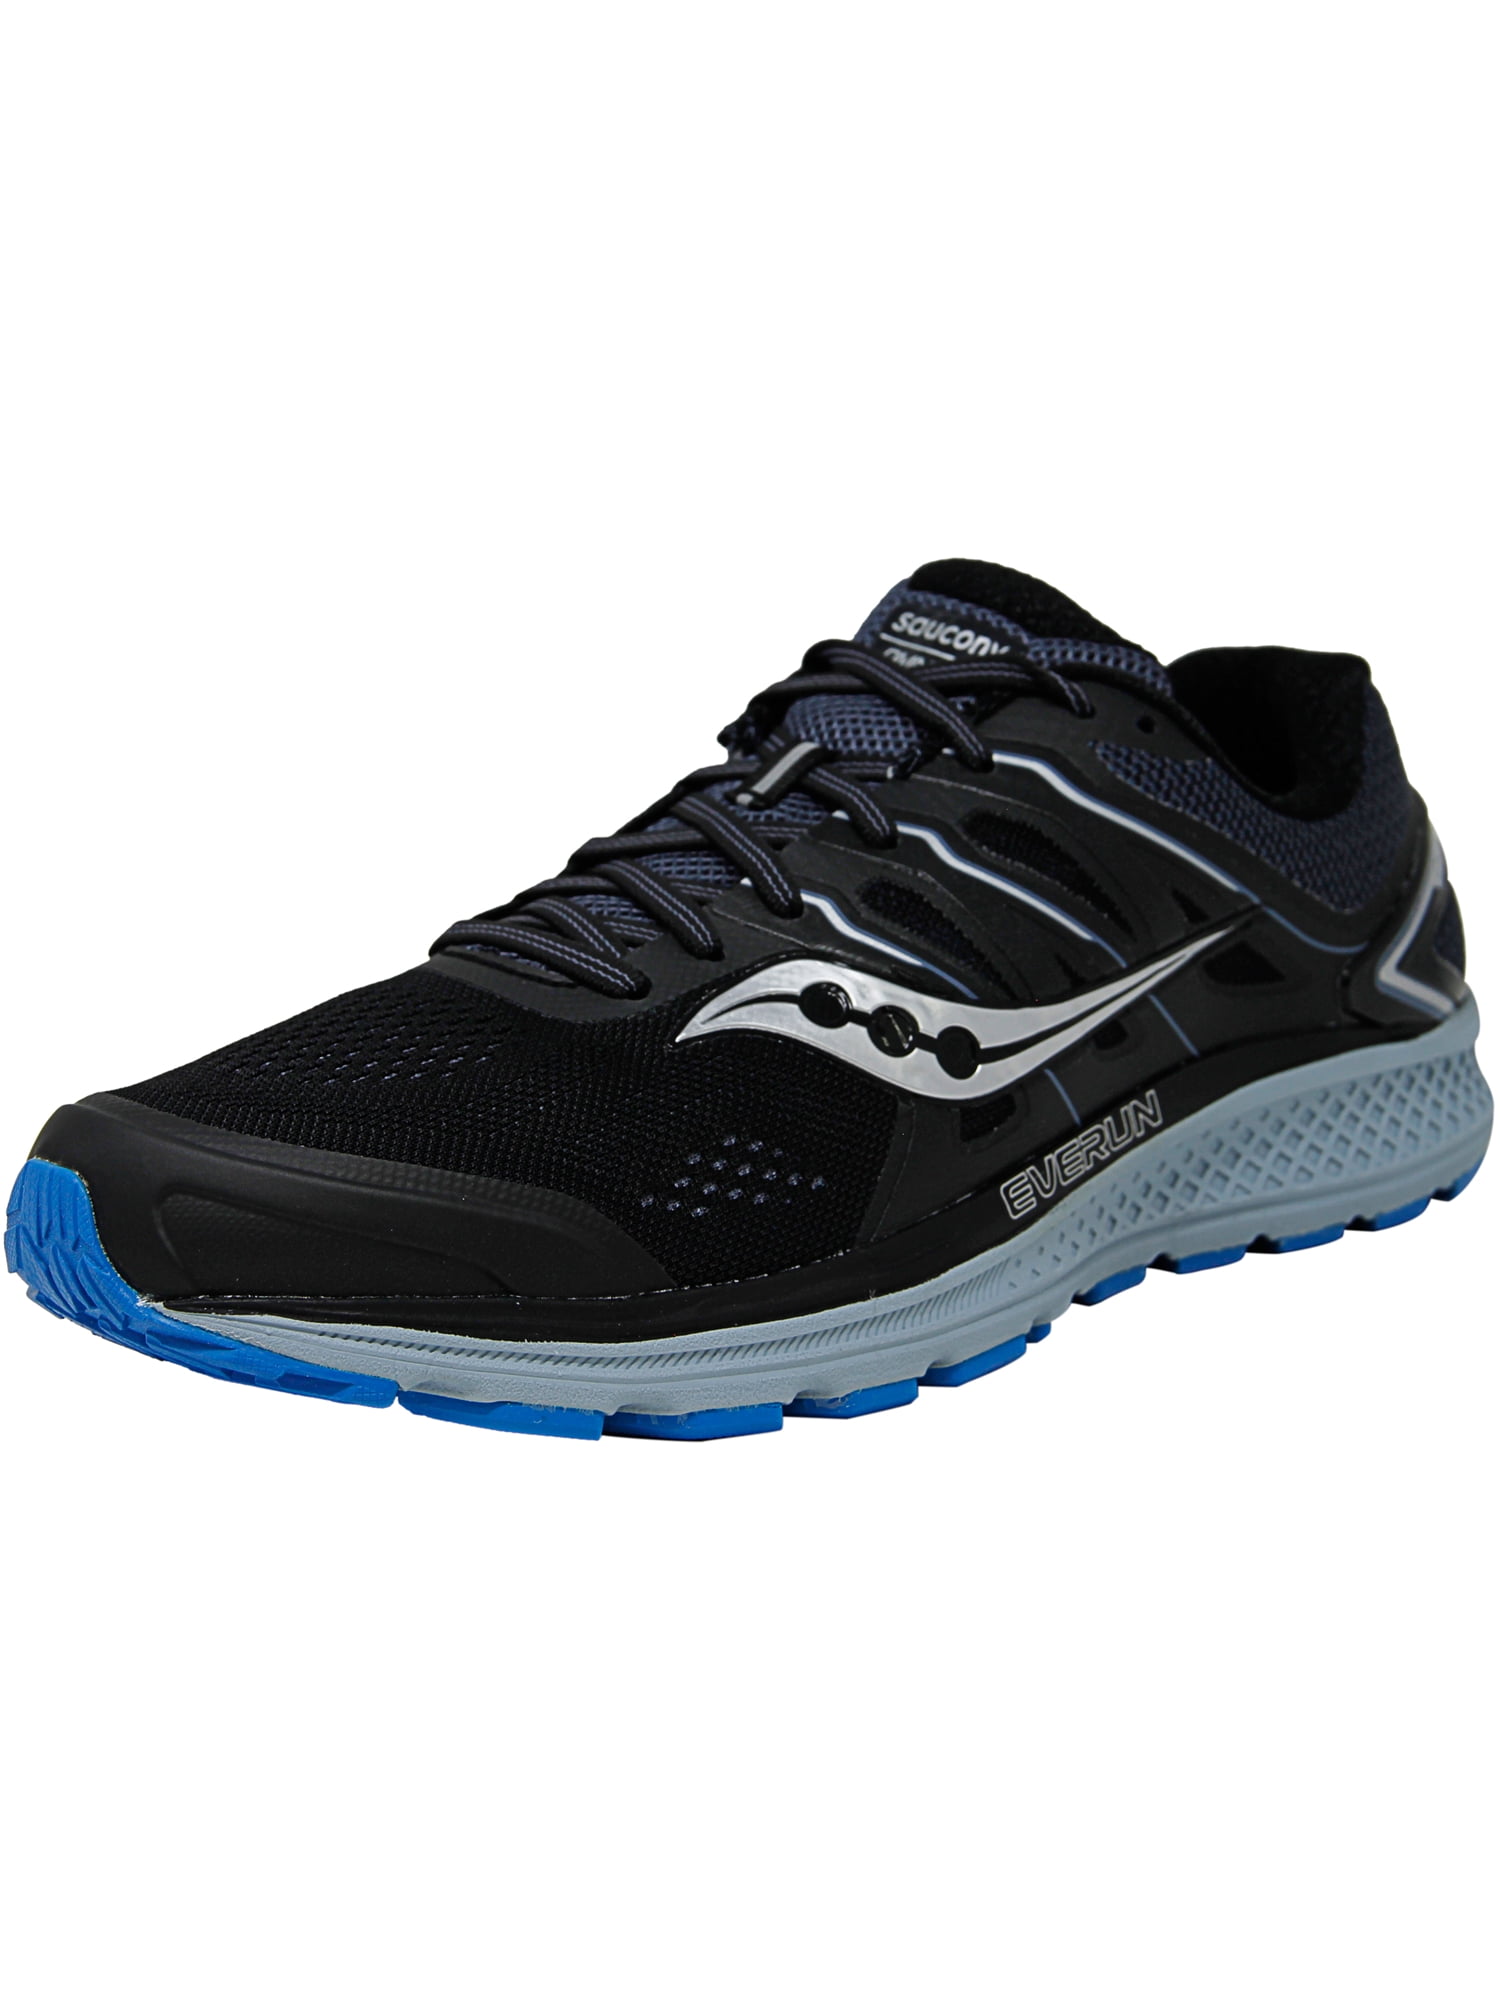 Saucony Men's Omni 16 Black / Grey Blue Ankle-High Running Shoe - 11M ...